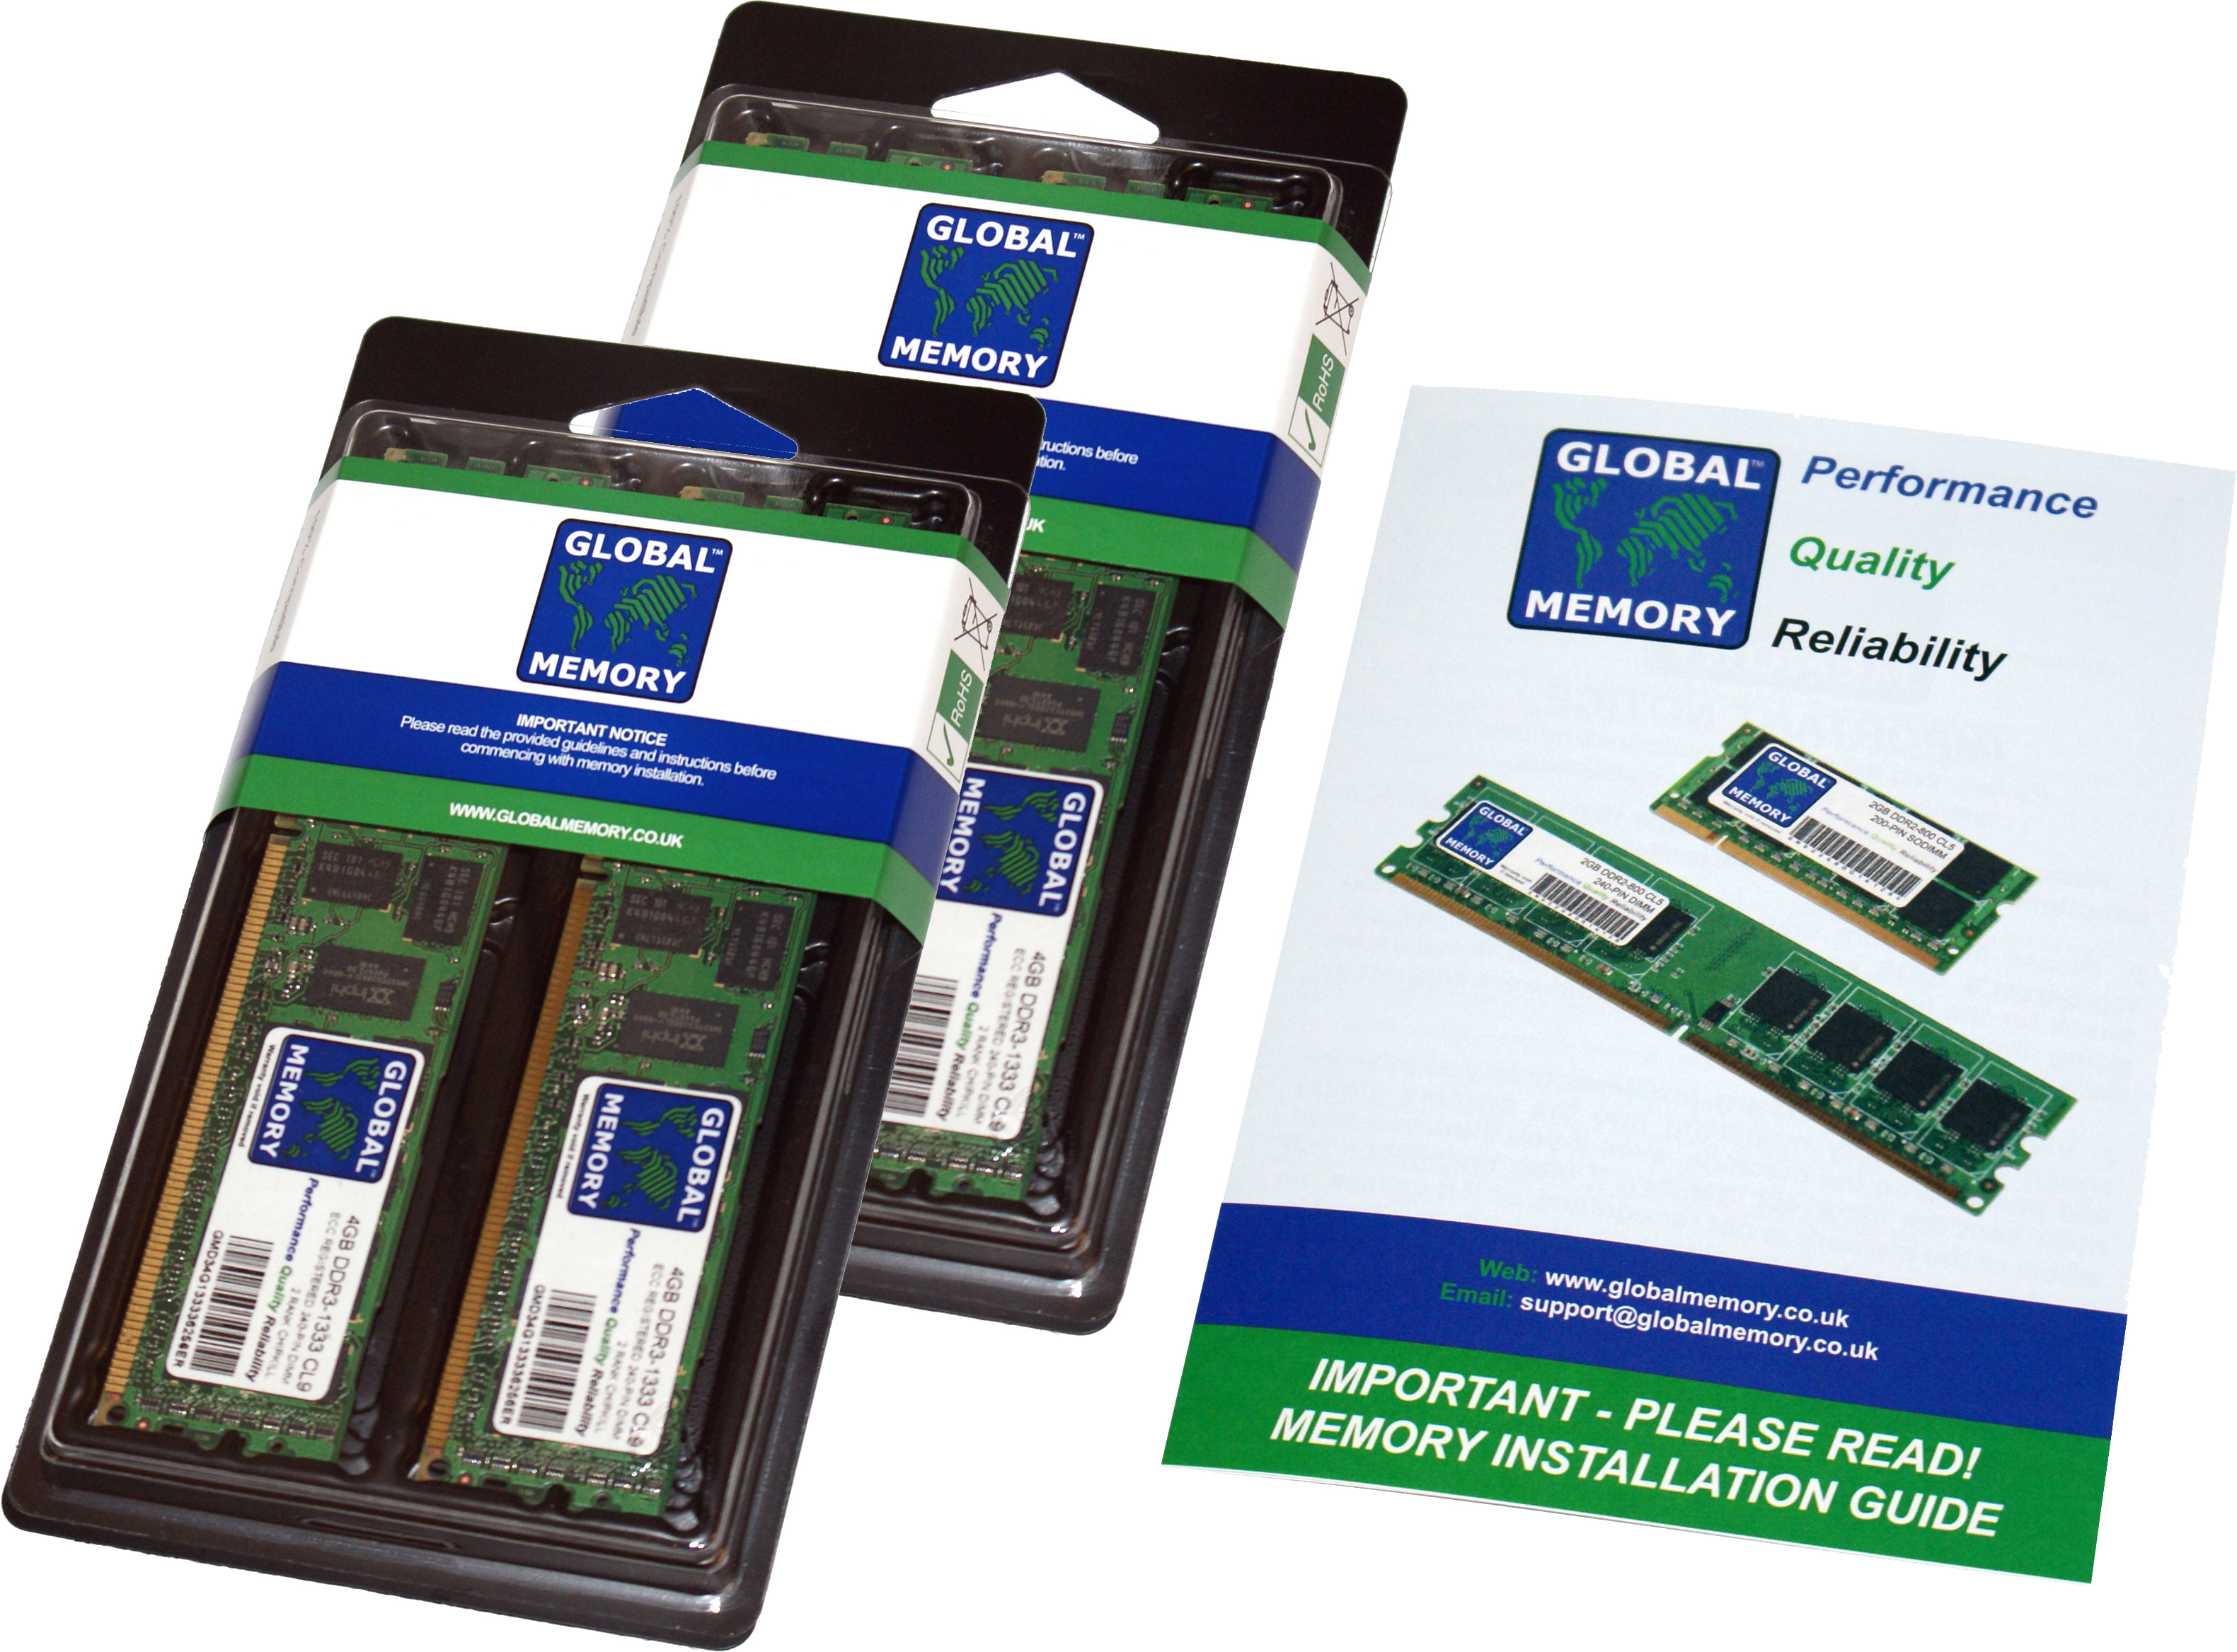 128GB (4 x 32GB) DDR4 2400MHz PC4-19200 288-PIN ECC REGISTERED DIMM (RDIMM) MEMORY RAM KIT FOR LENOVO SERVERS/WORKSTATIONS (8 RANK KIT CHIPKILL)